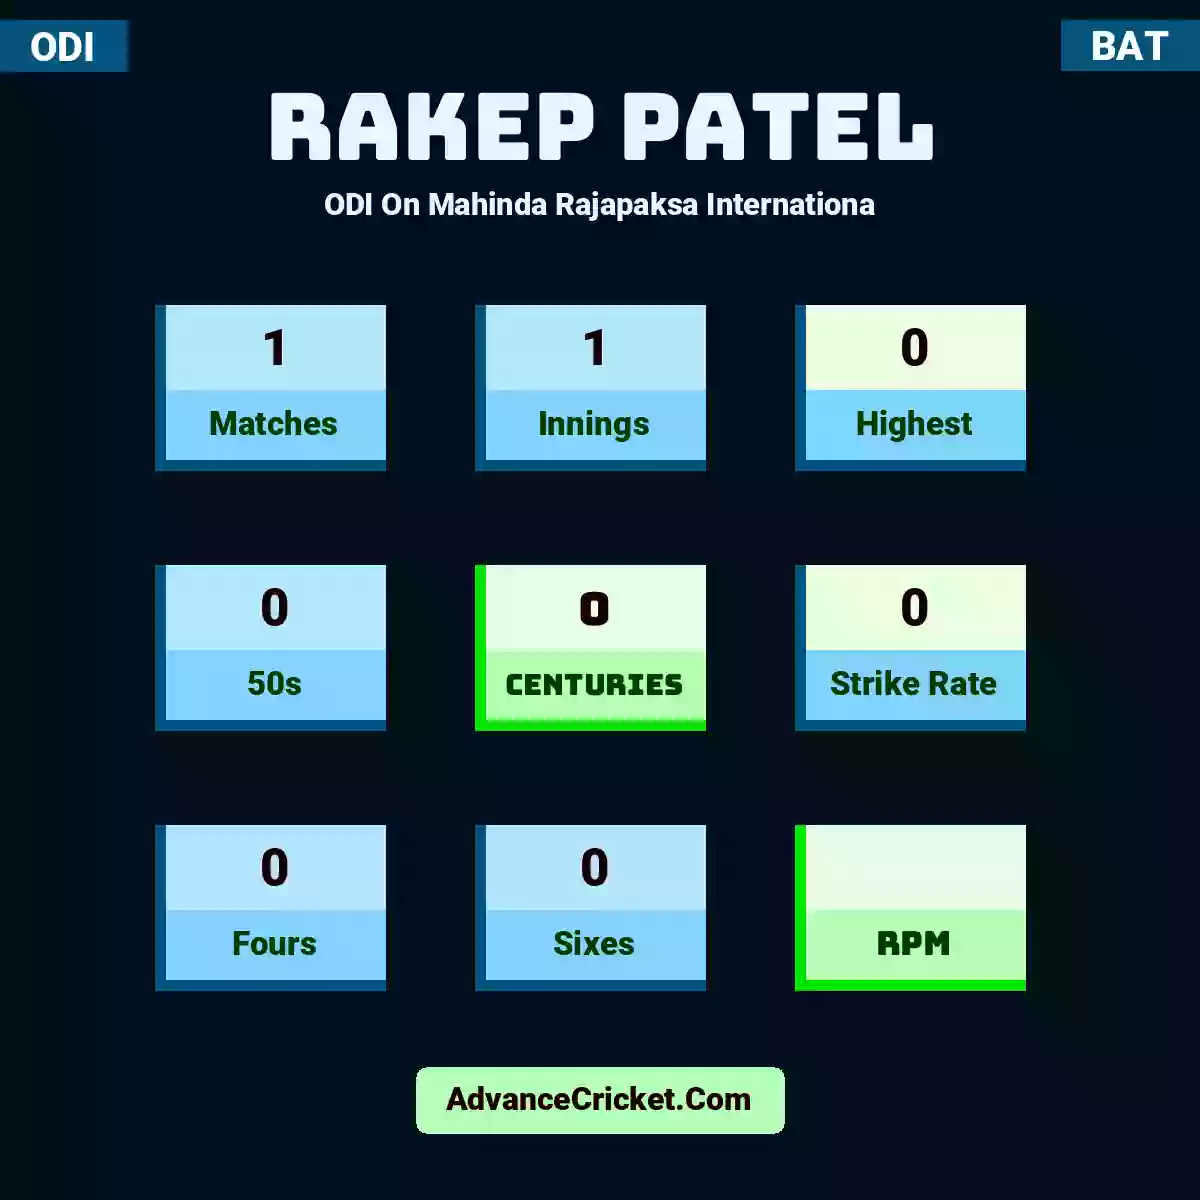 Rakep Patel ODI  On Mahinda Rajapaksa Internationa, Rakep Patel played 1 matches, scored 0 runs as highest, 0 half-centuries, and 0 centuries, with a strike rate of 0. R.Patel hit 0 fours and 0 sixes.